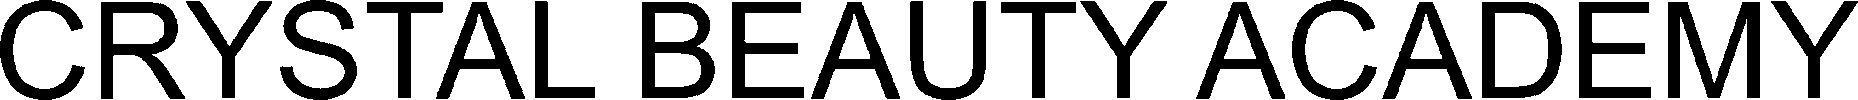 Trademark Logo CRYSTAL BEAUTY ACADEMY